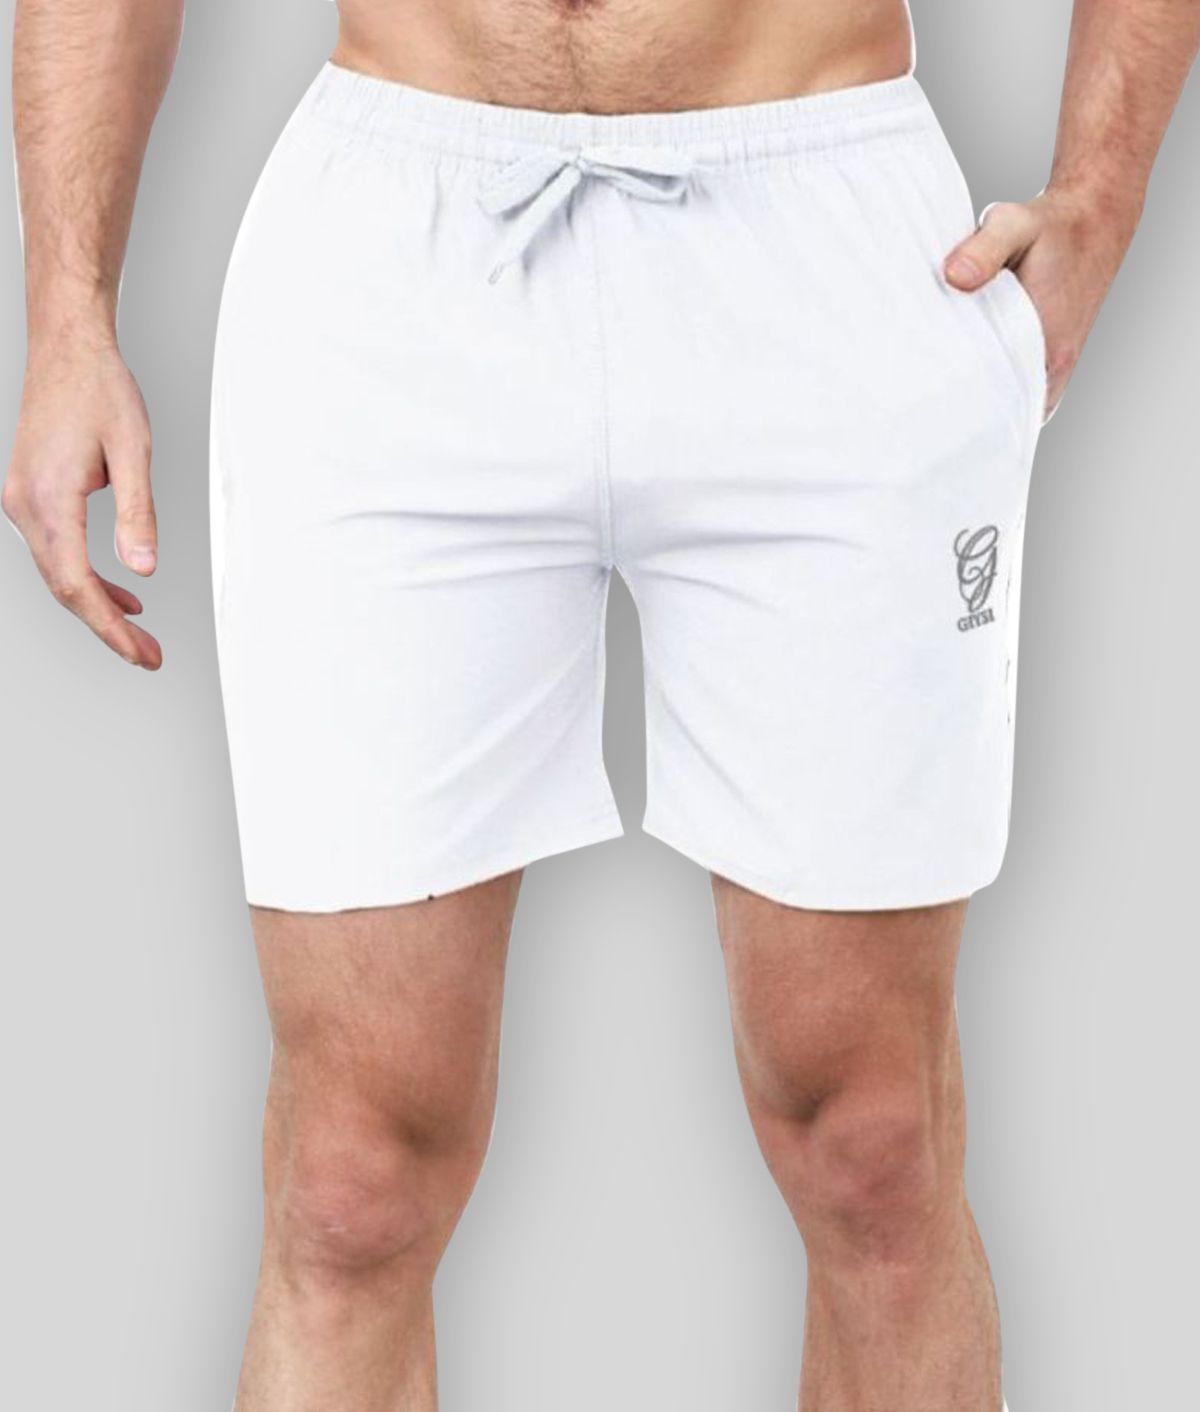 GIYSI White Polyester Viscose Fitness Shorts